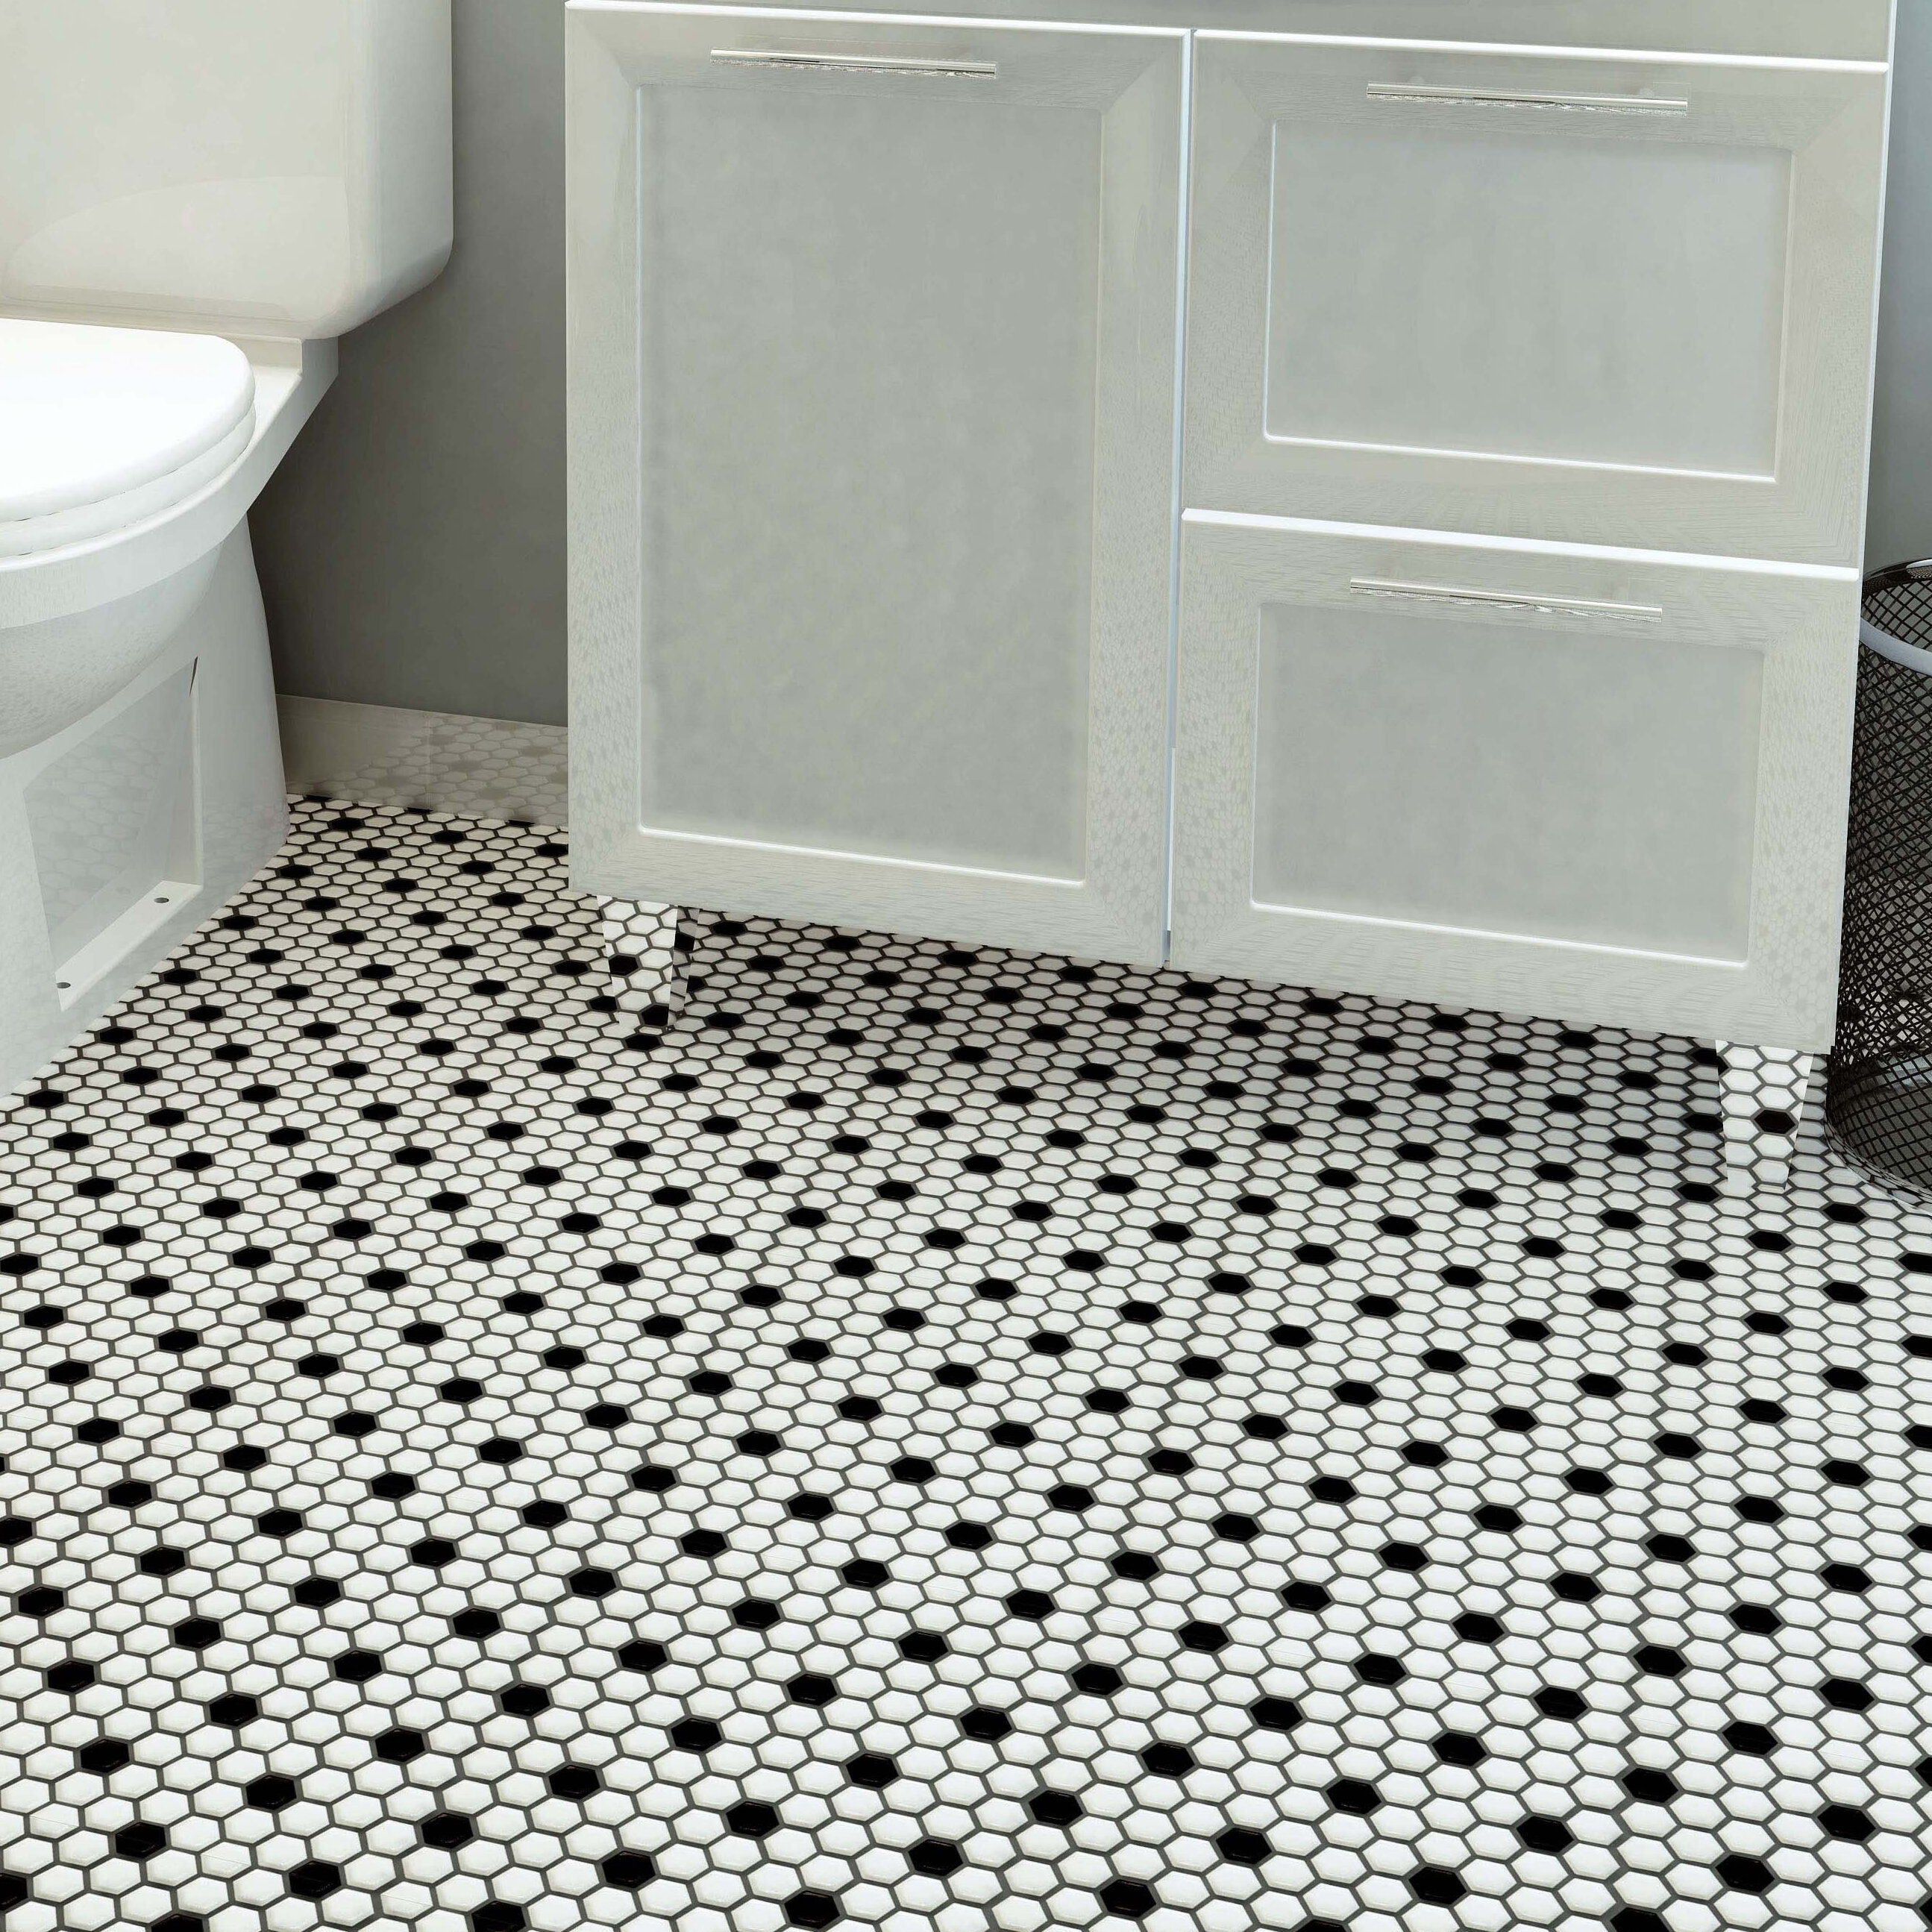 Elitetile Metro Hex 1 X 1 Porcelain Honeycomb Mosaic Wall Floor Tile Reviews Wayfair